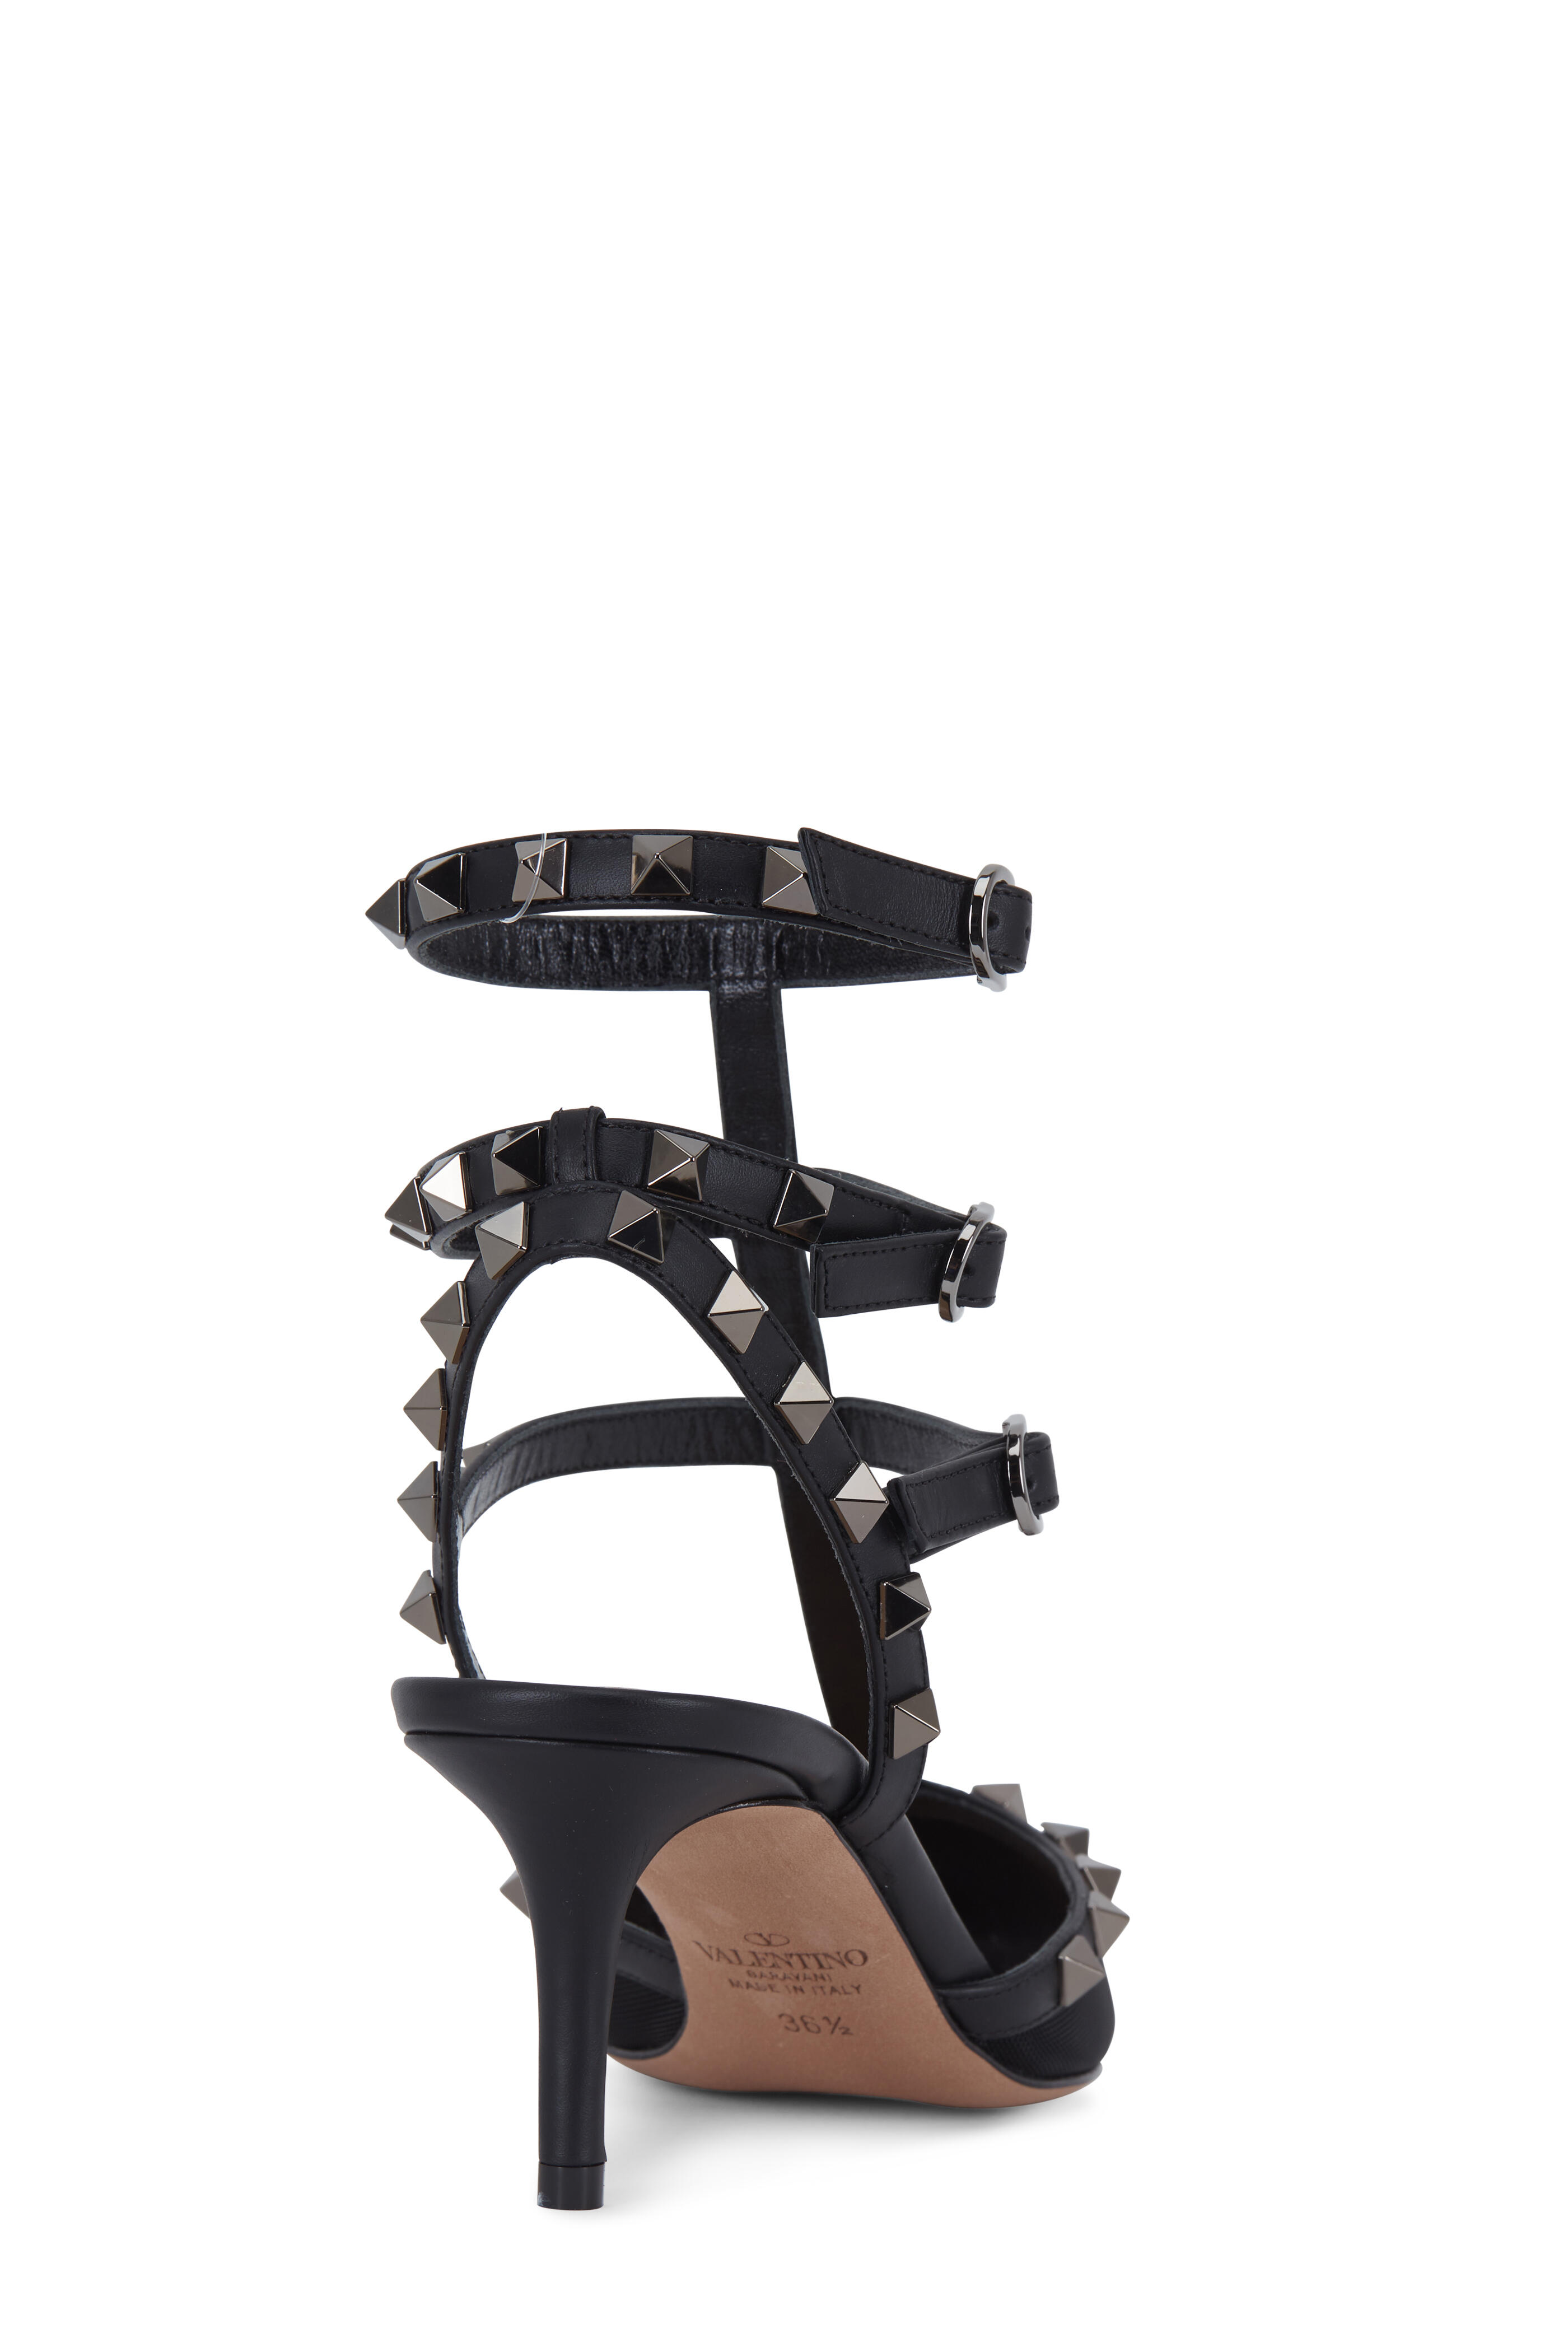 Valentino Garavani Women's Rockstud Metallic Ankle Strap Pump